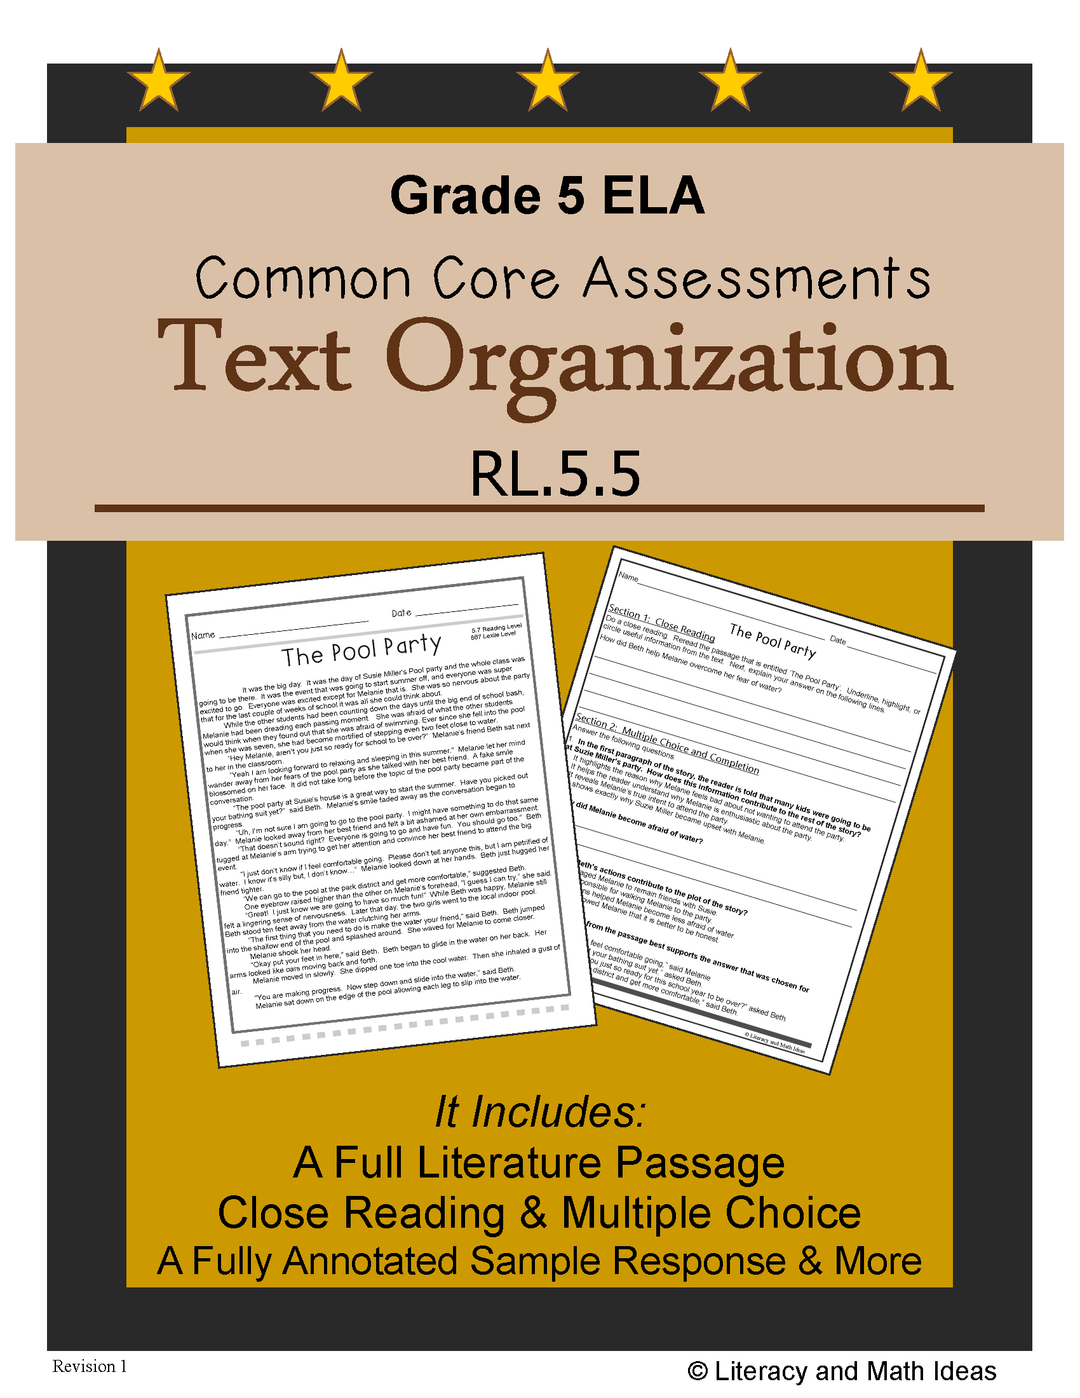 Grade 5 Common Core Assessments: Text Organization RL.5.5